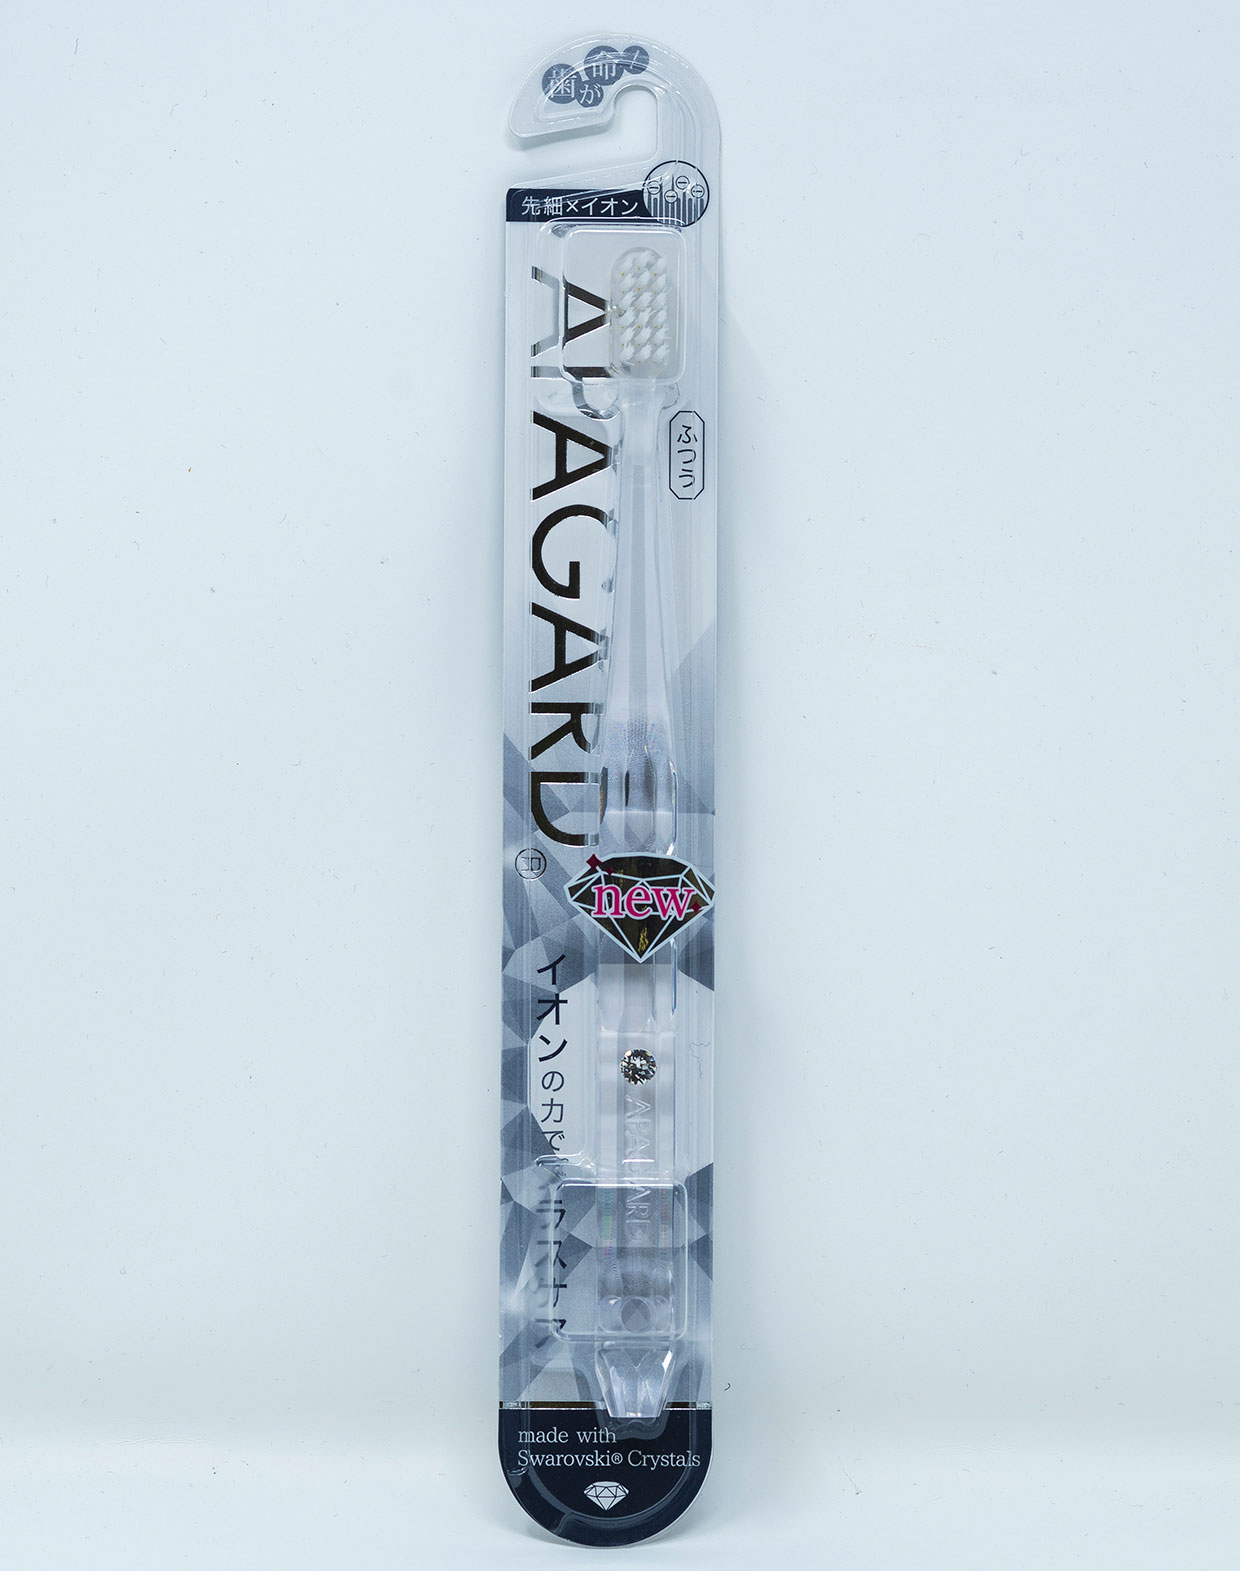 Apagard Spazzolino Crystal con Swarovski® - Vari Colori